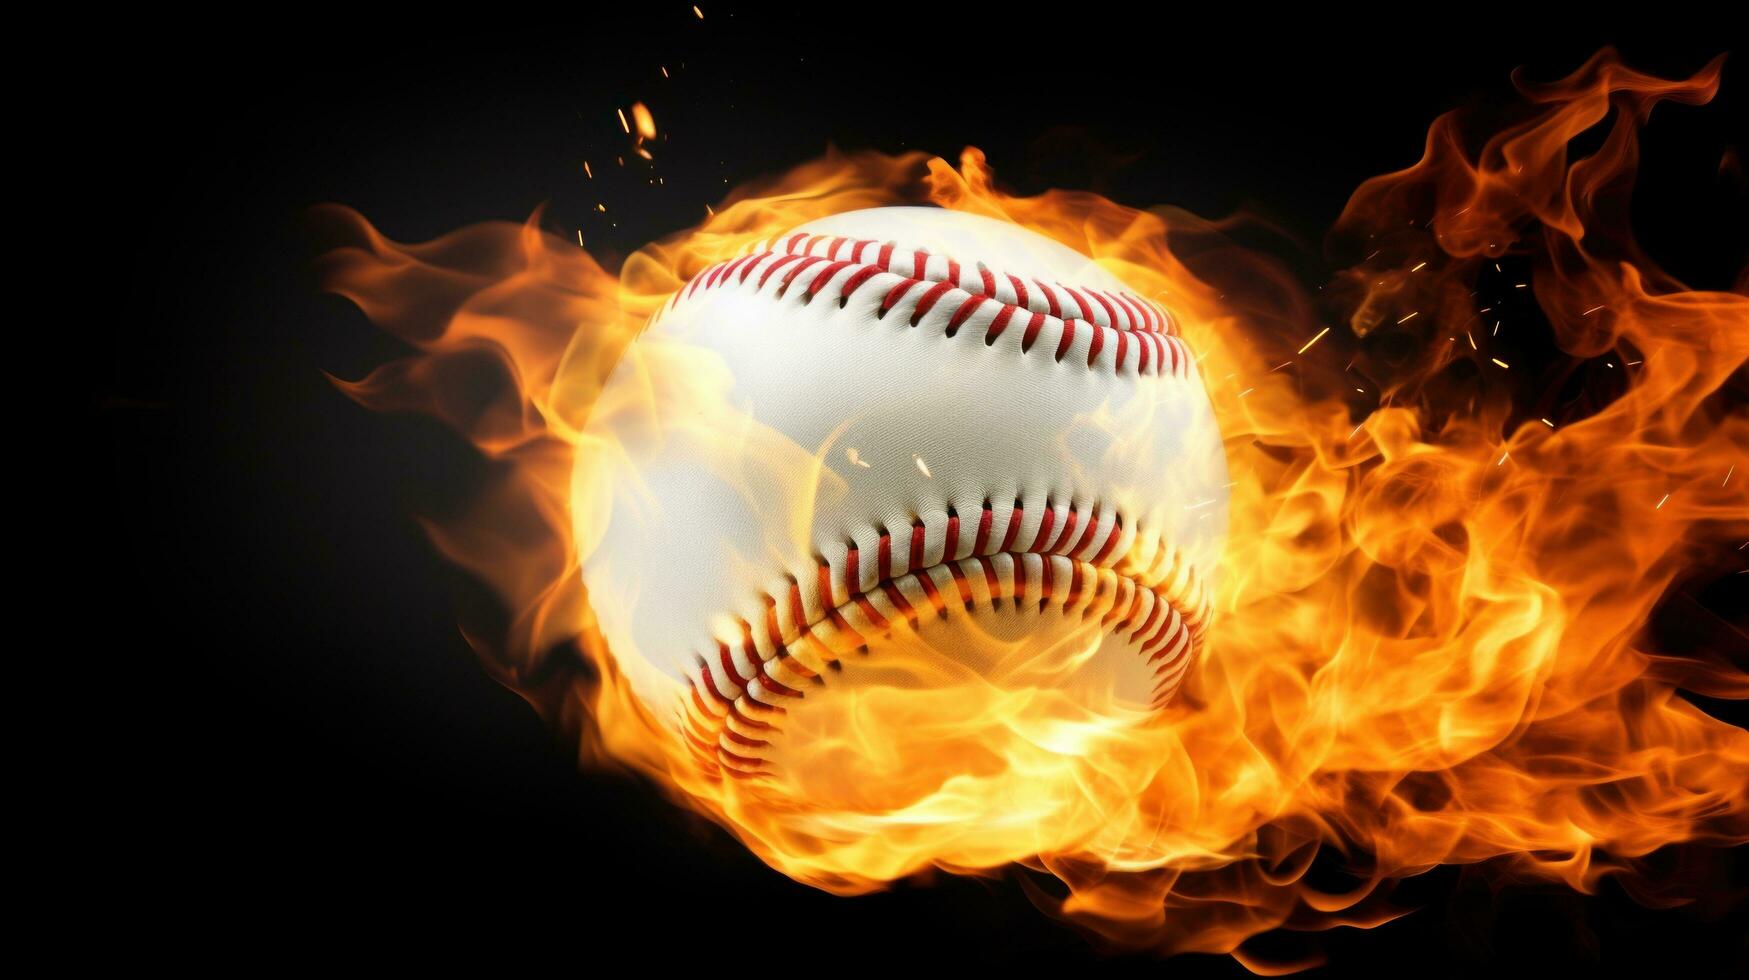 AI generated An eye-catching image of a baseball ball on fire photo